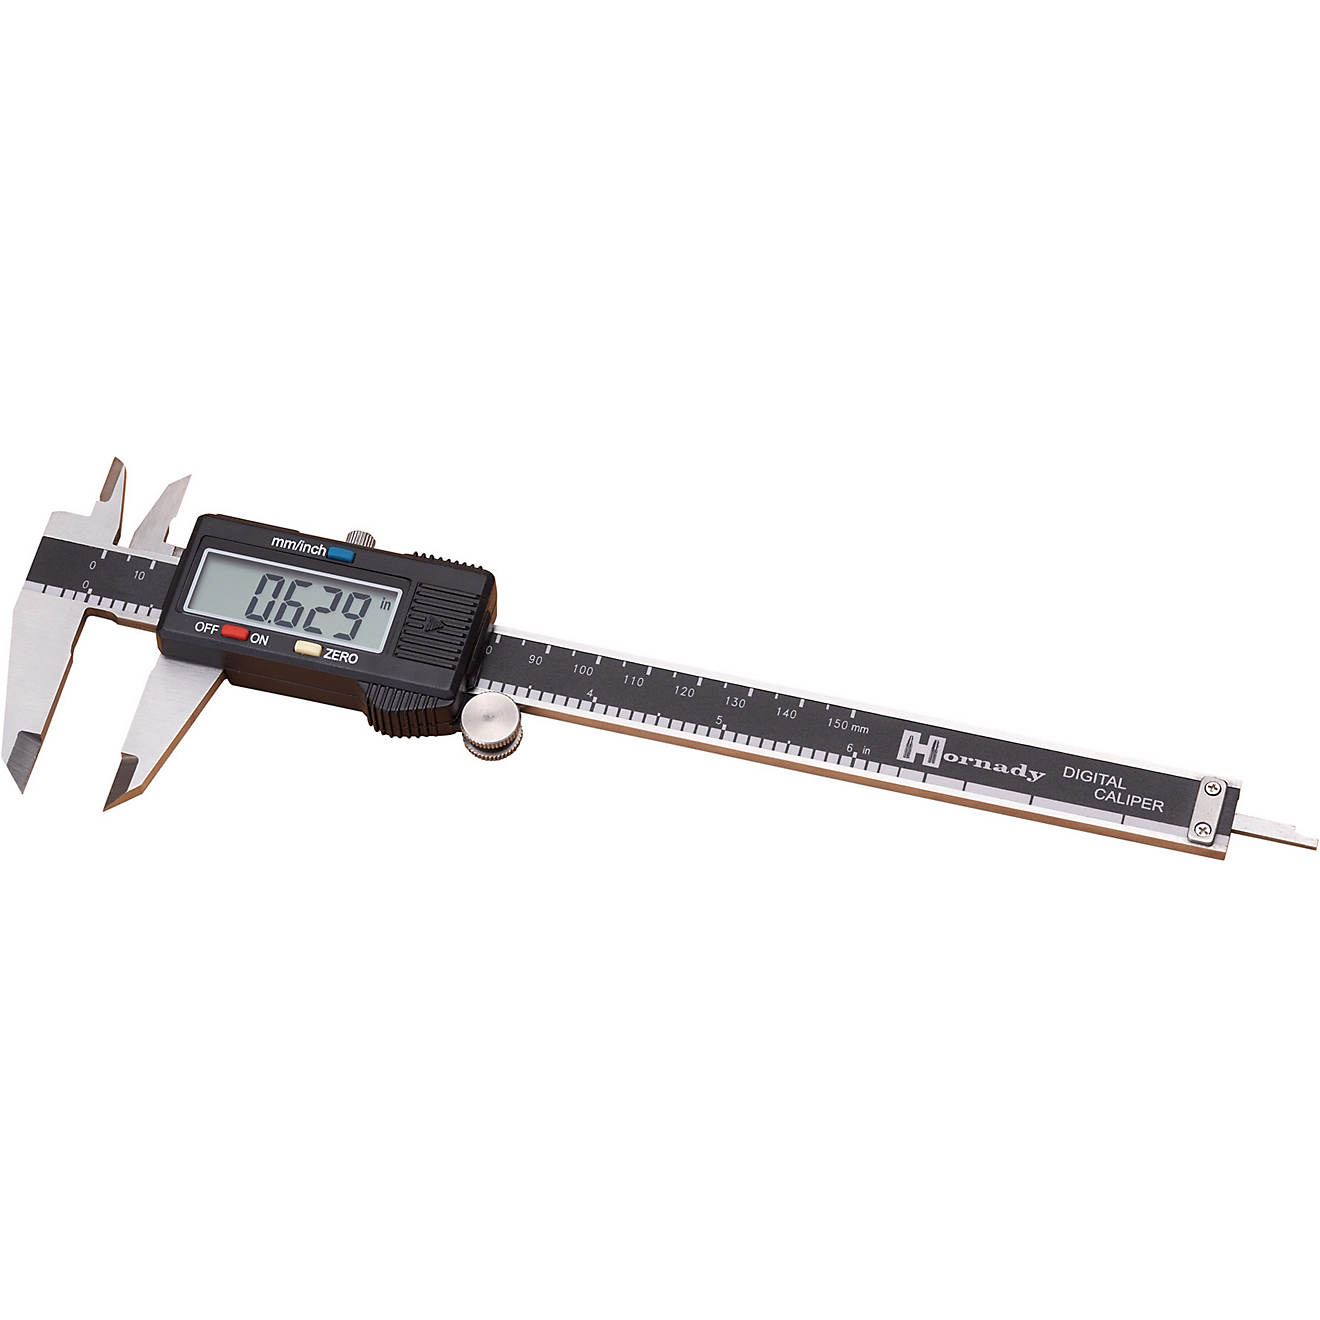 Hornady Digital Caliper Precision Measuring Device w/Battery/Storage Case 050080